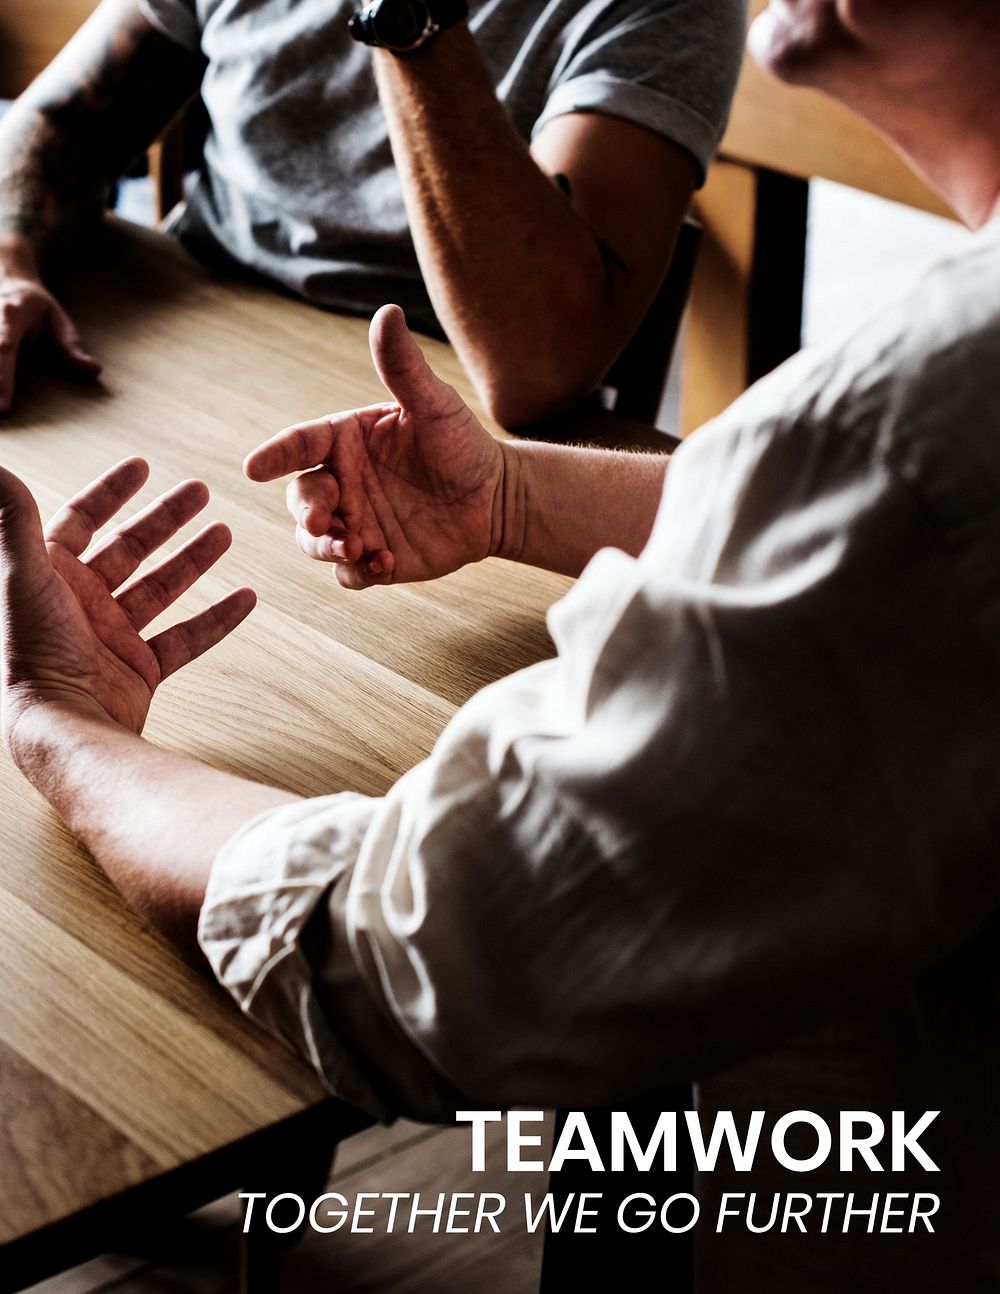 Business teamwork flyer template, meeting aesthetic